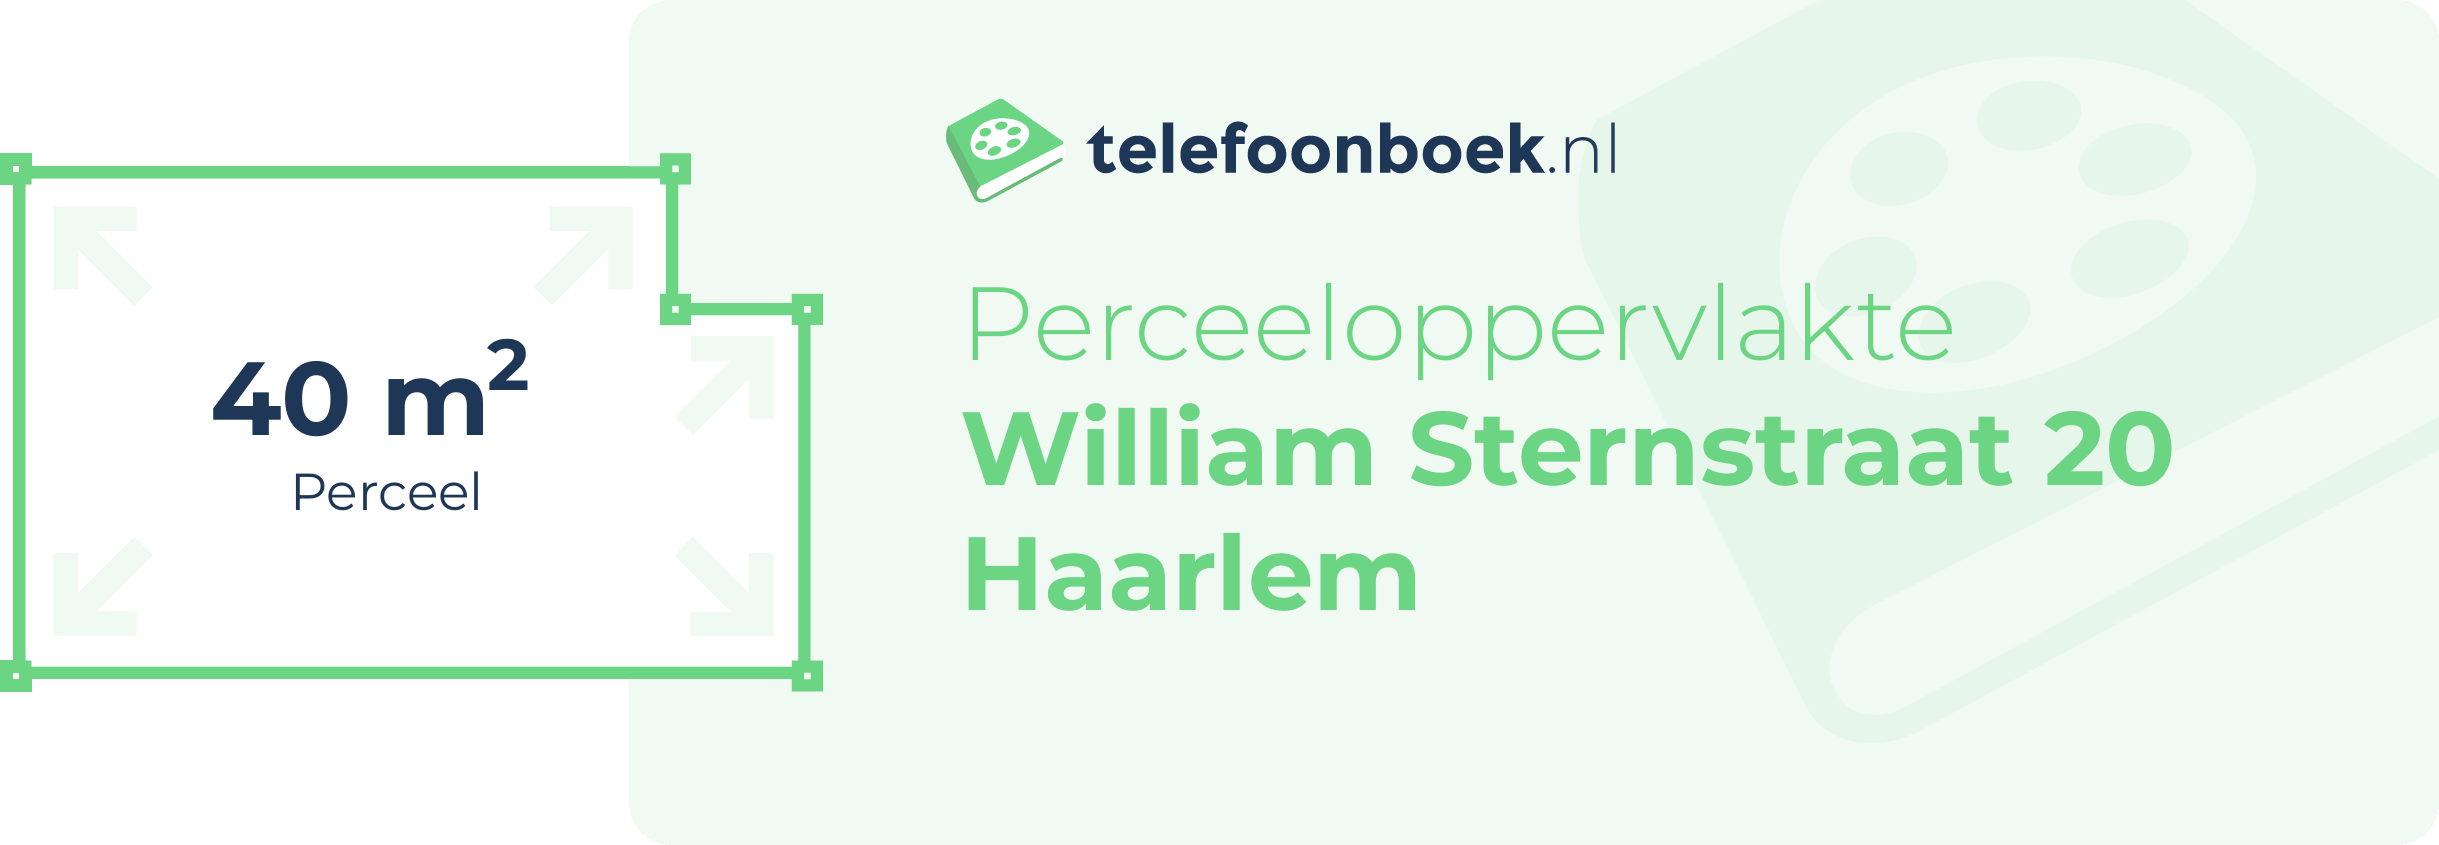 Perceeloppervlakte William Sternstraat 20 Haarlem